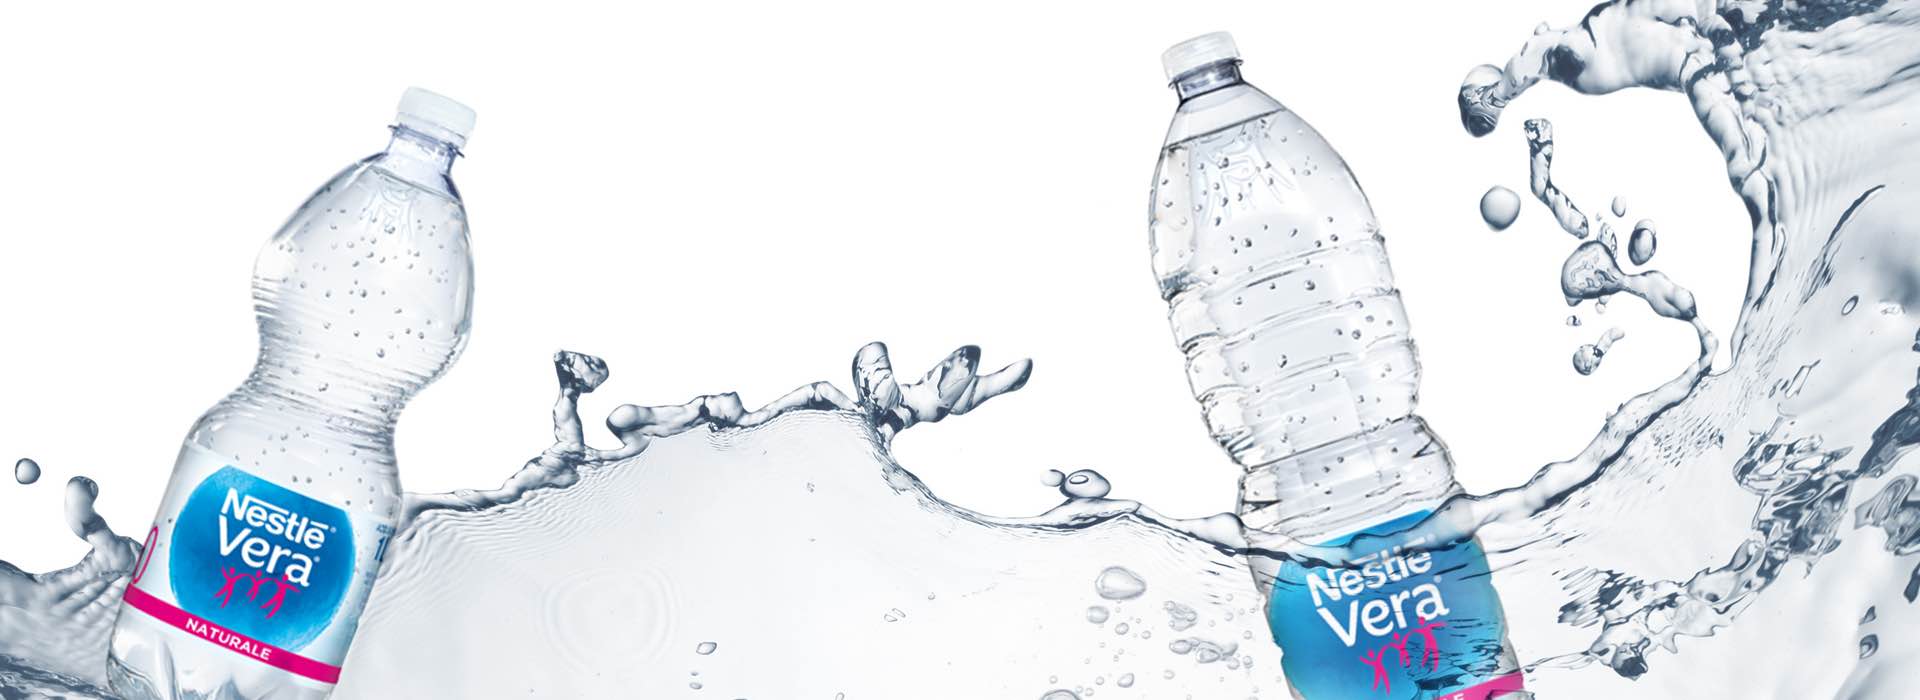 Nestlé Vera bottled water labels repackaging